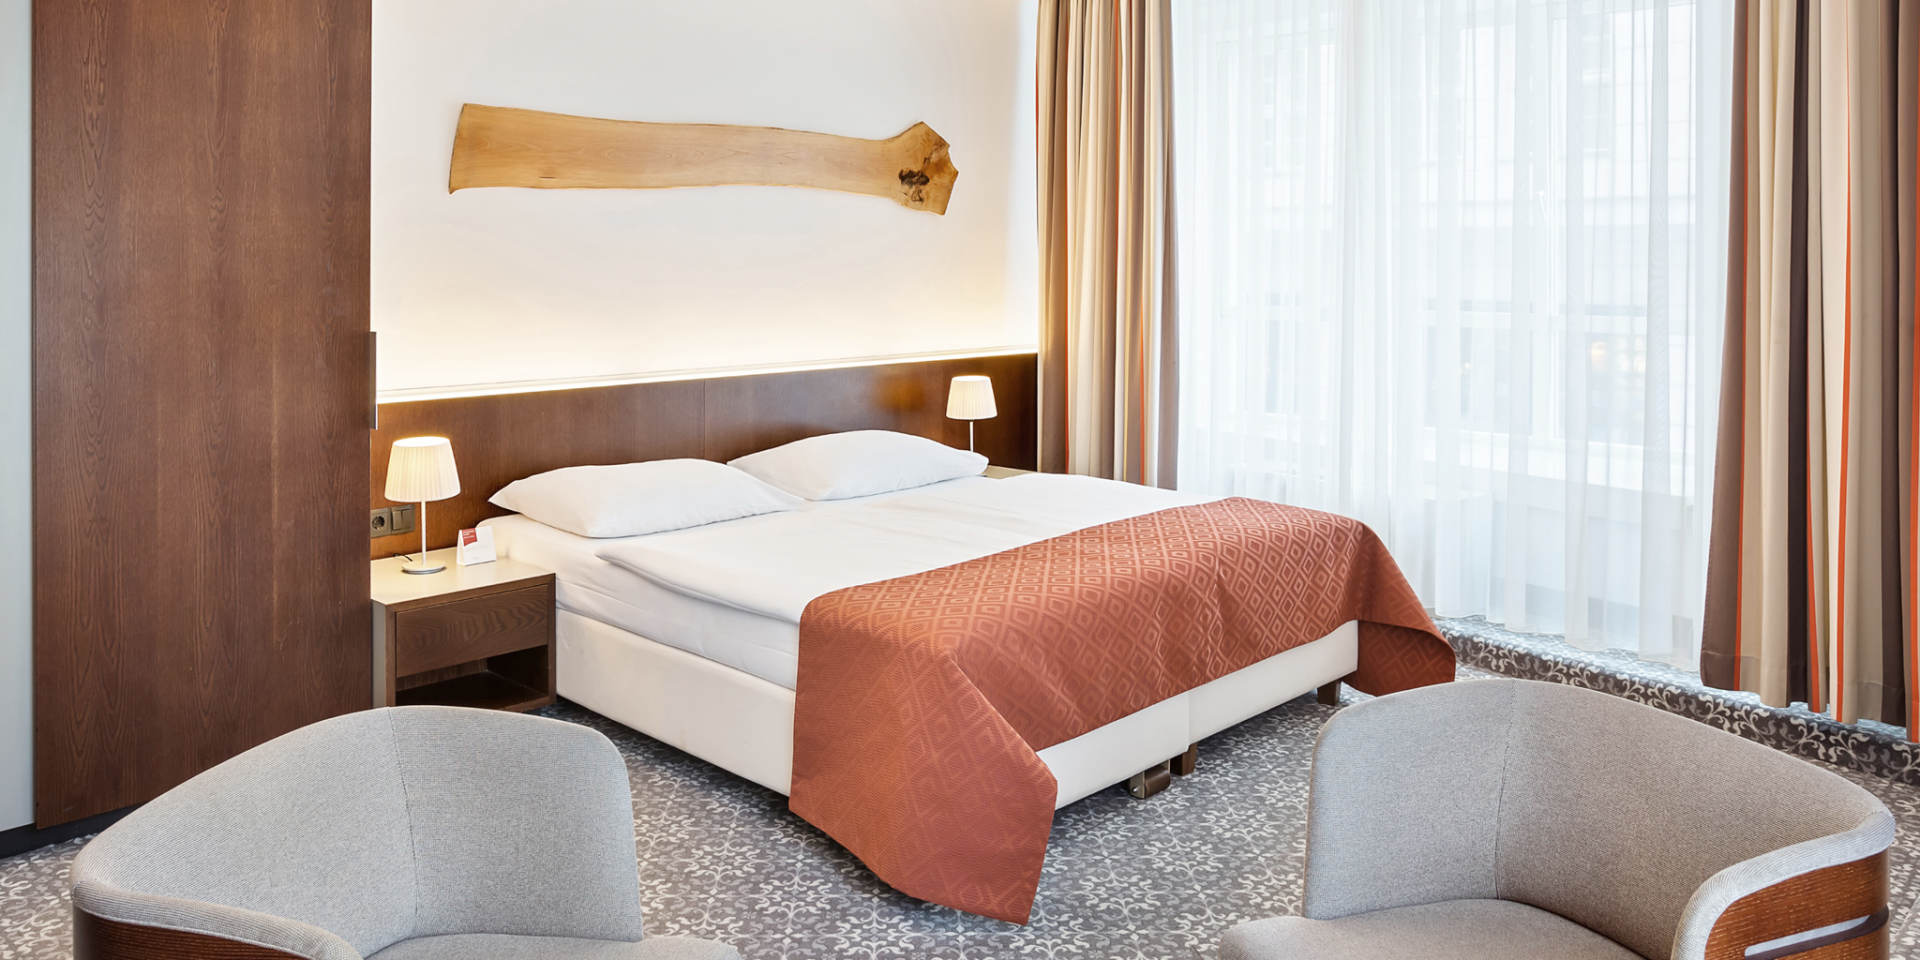 Austria Trend Hotel Europa Wien - comfort room © Austria Trend Hotels